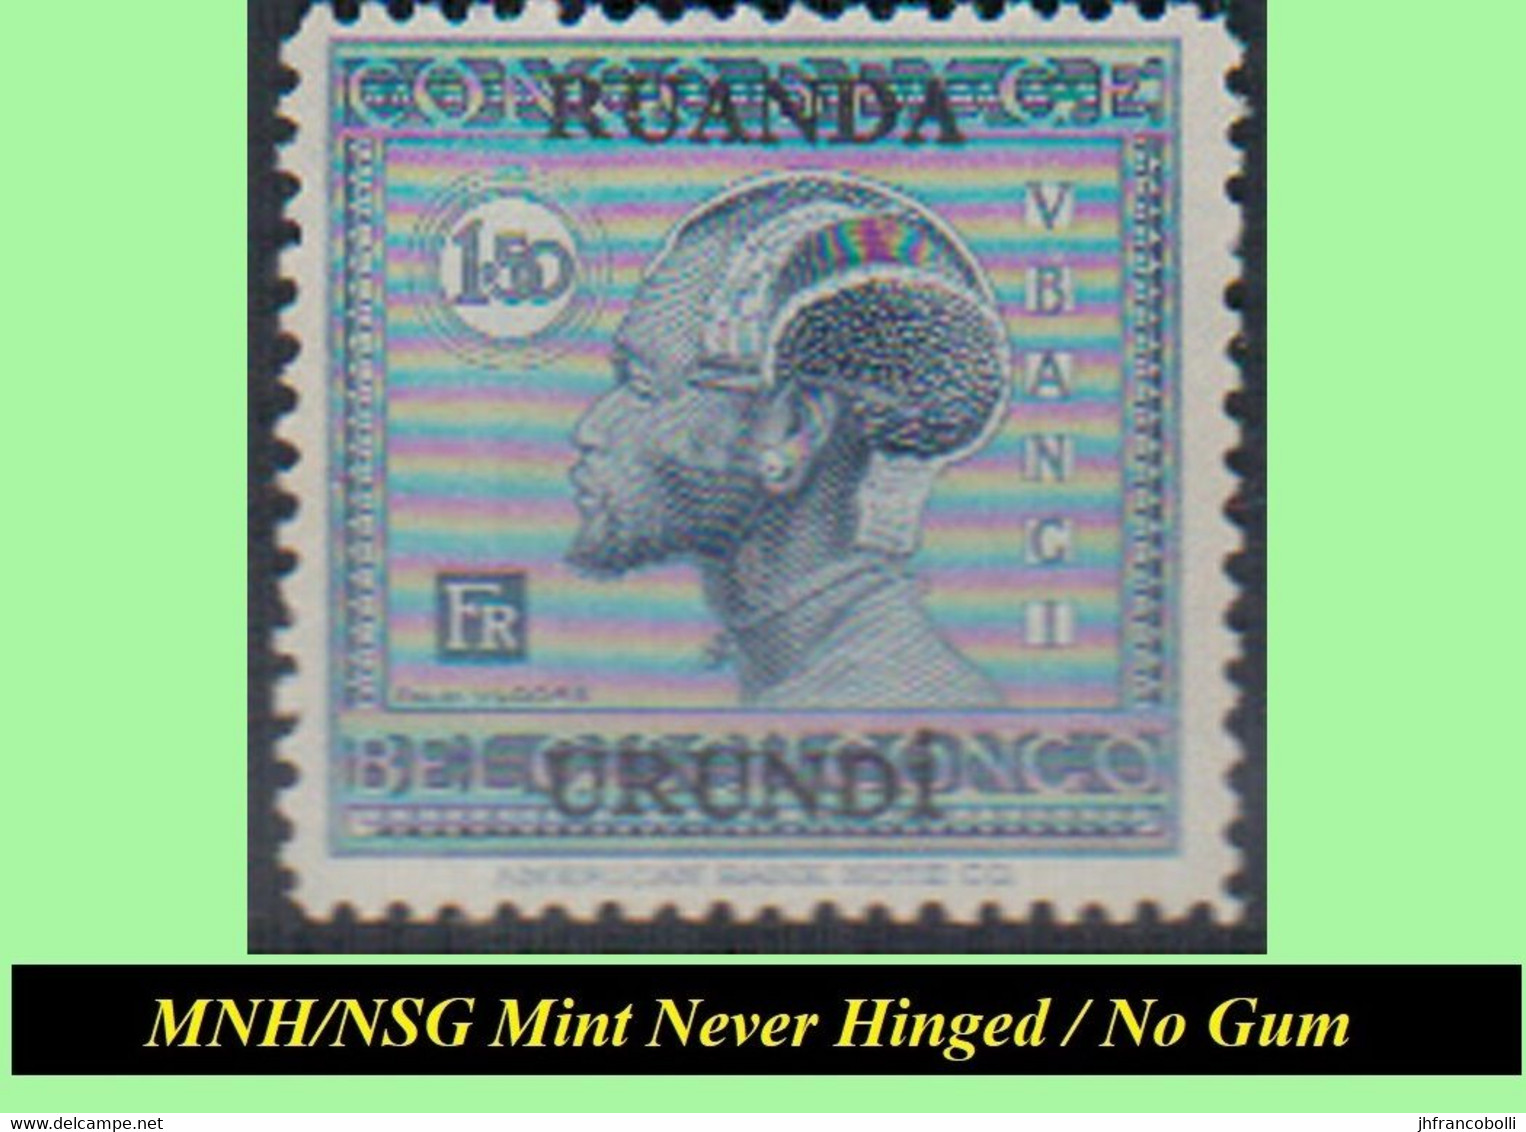 1924+25 ** RUANDA-URUNDI RU 050/060 MNH/NSG VLOORS [C] SELECTION  ( x 12 stamps ) [NO GUM] INCLUDING RU 059+060+074-076